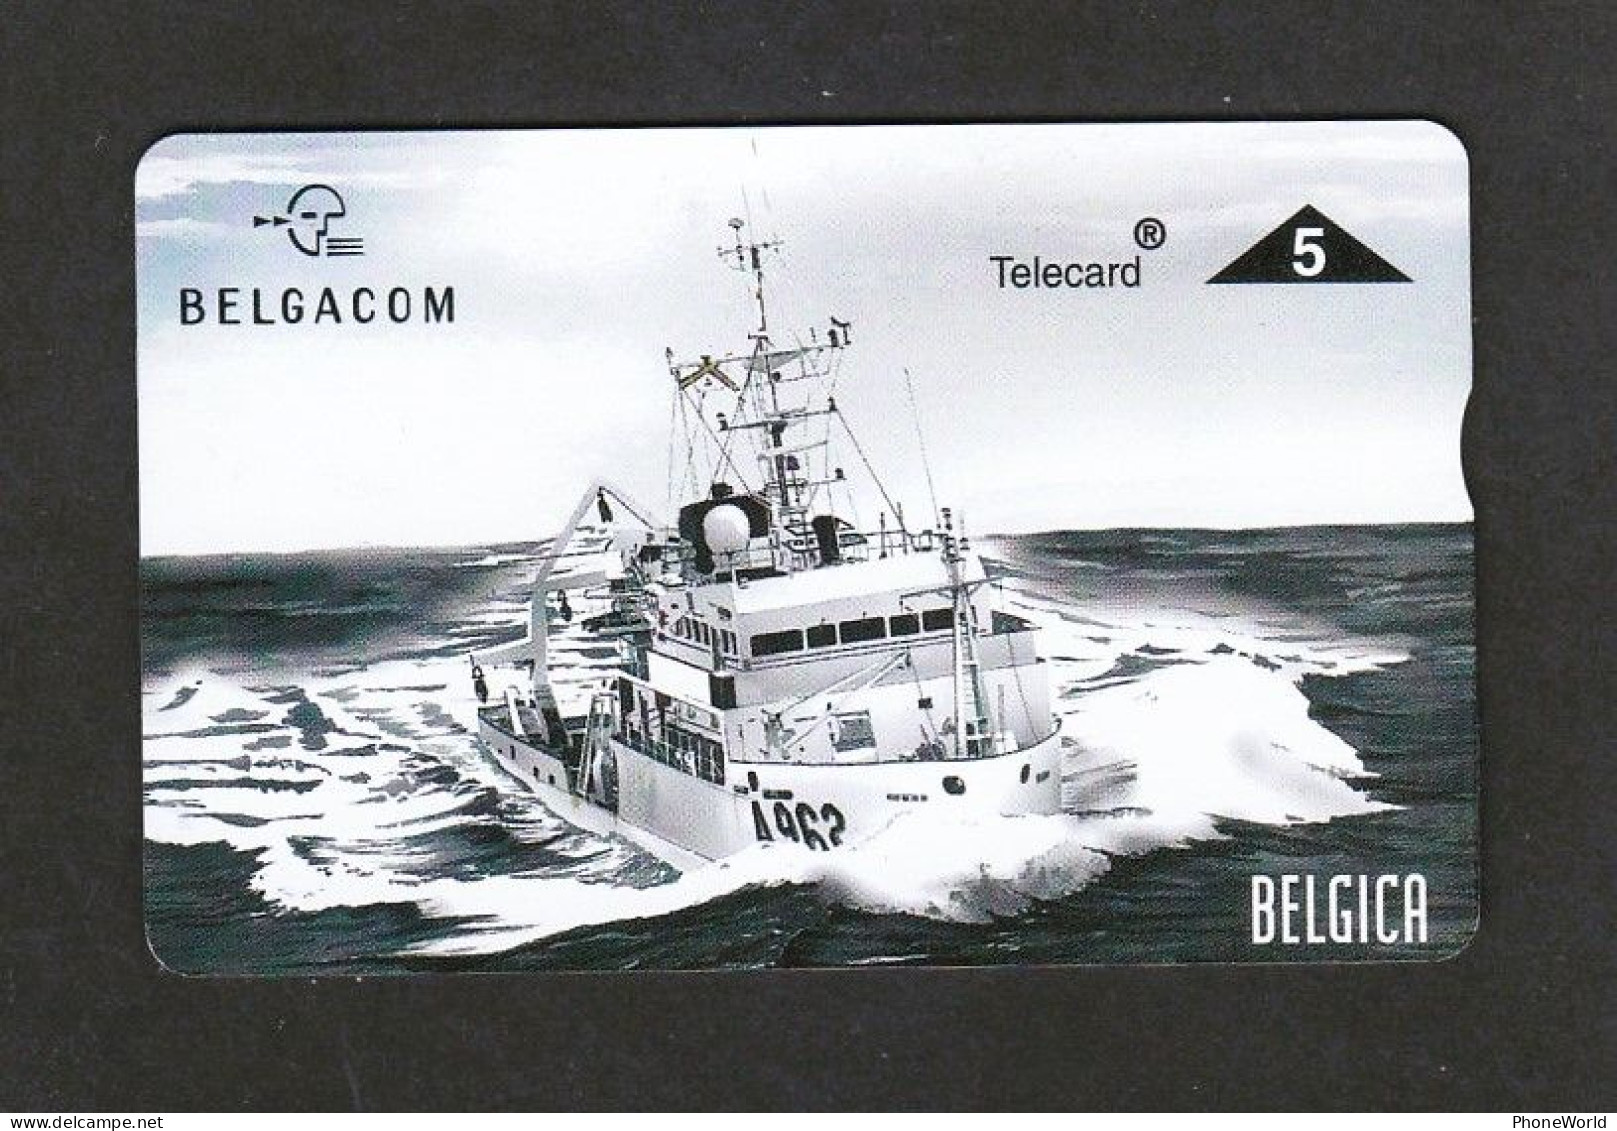 Belgacom, P551 - Belgica 2 - 706 L Mint - Ship - Army - Zonder Chip